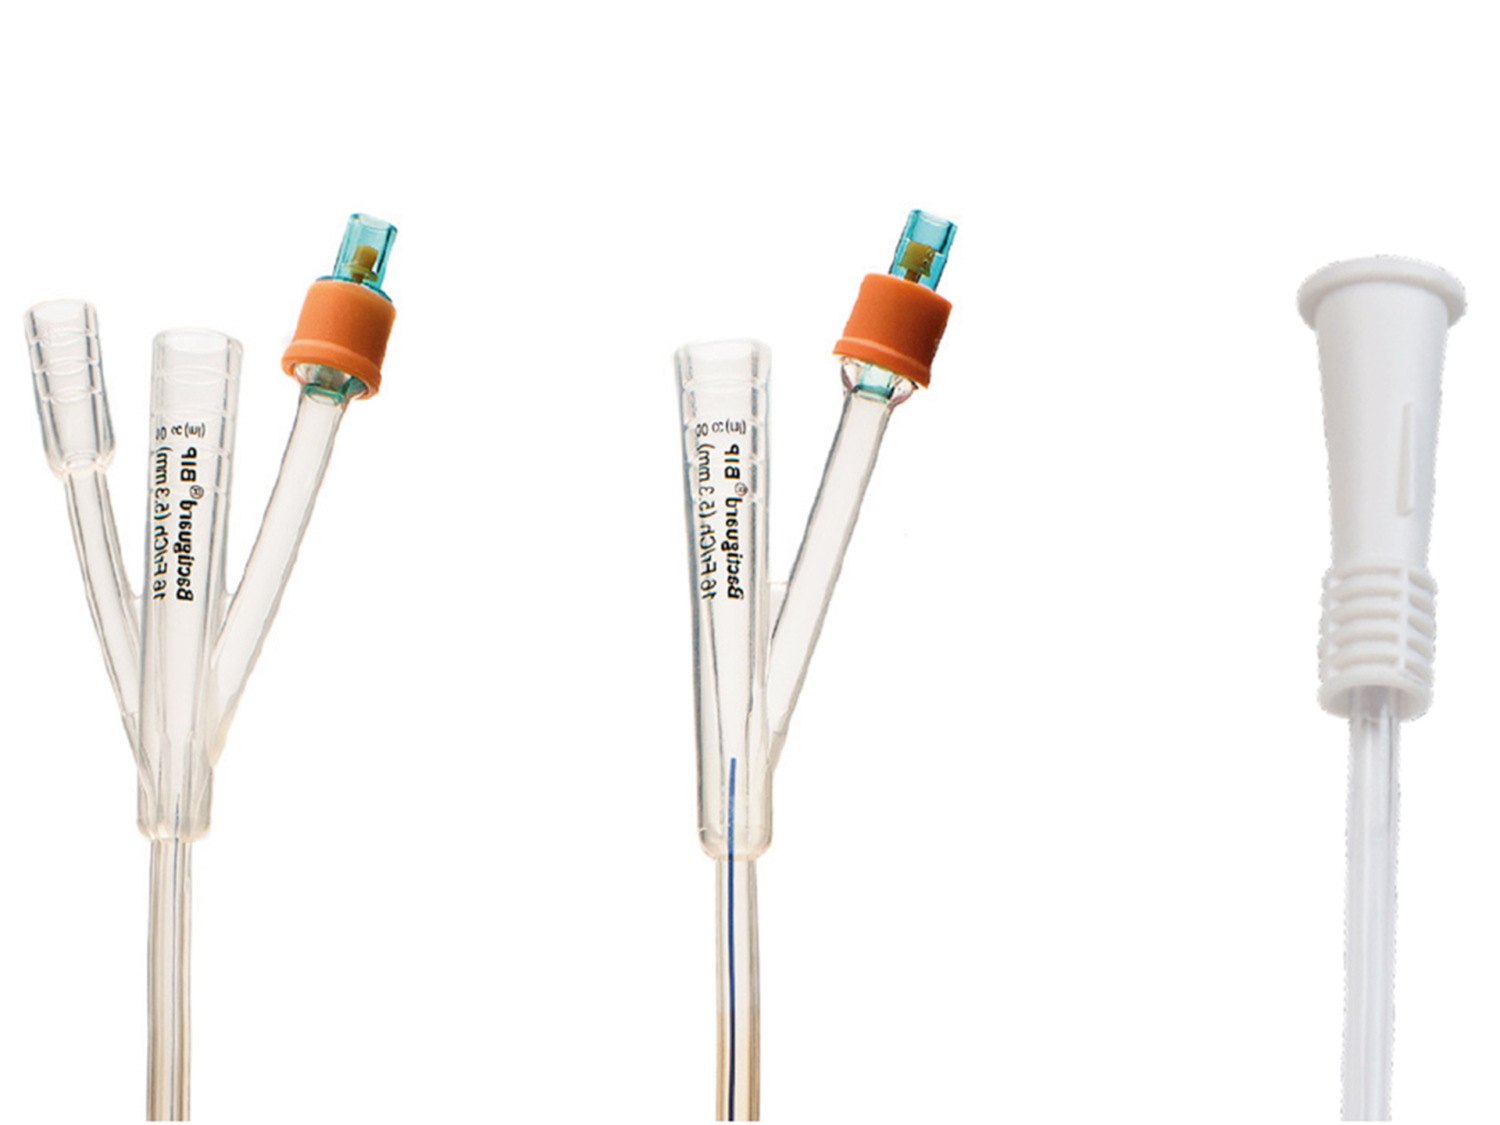 bactiguard-1-way-2-way-3-way-catheters-90degrees-1920p